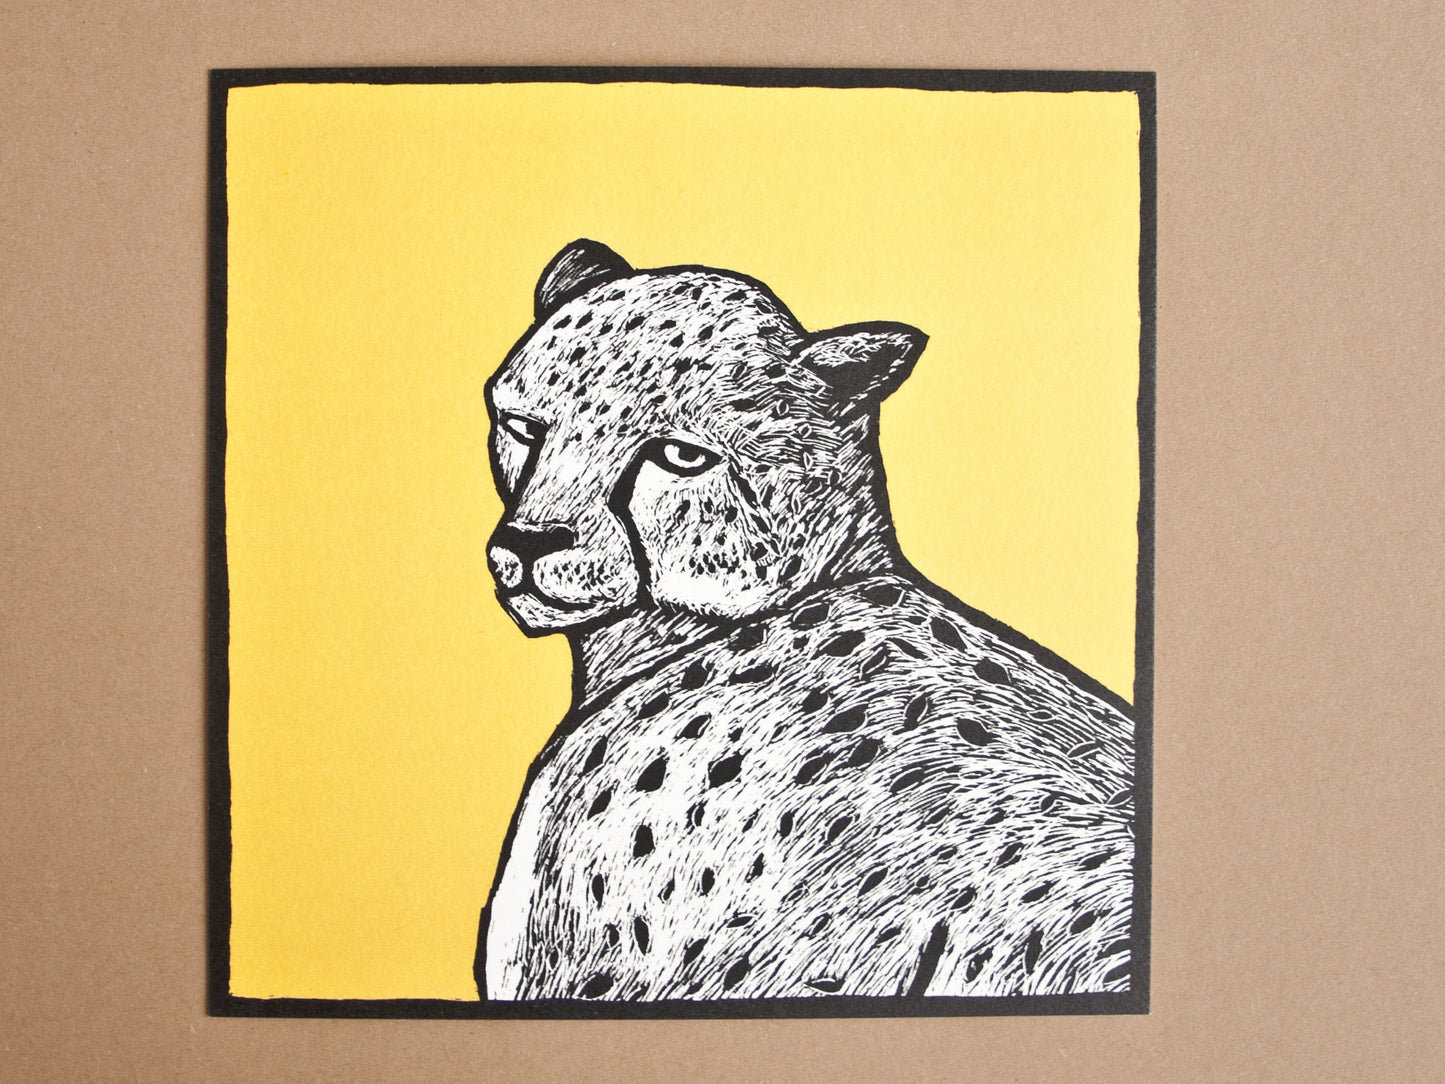 Gepard Postkarte